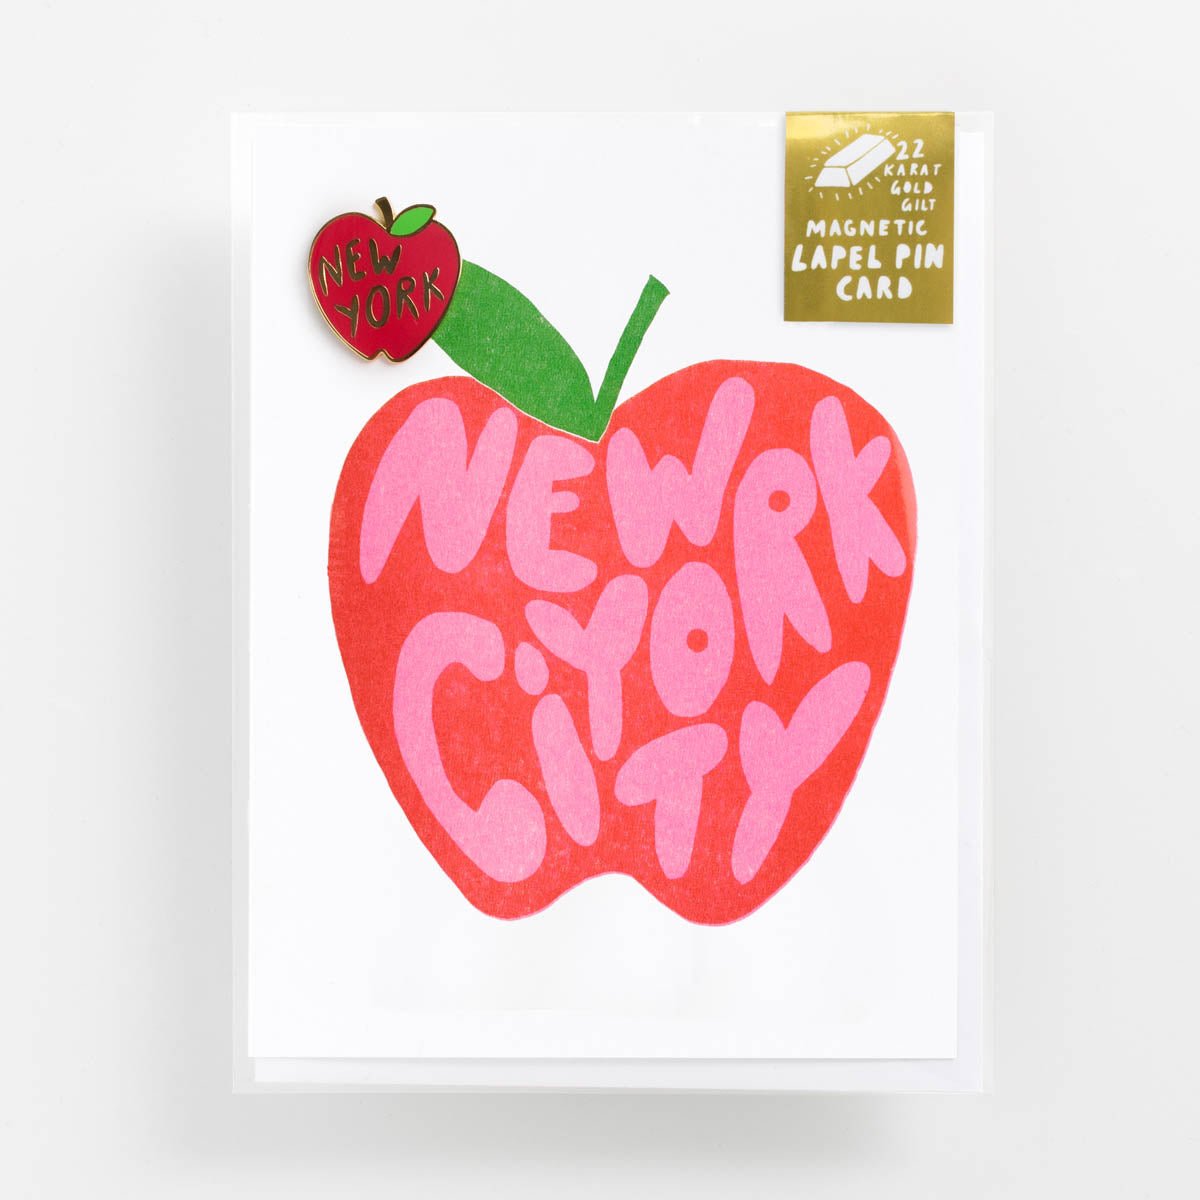 New York City - Lapel Pin Card - Yellow Owl Workshop